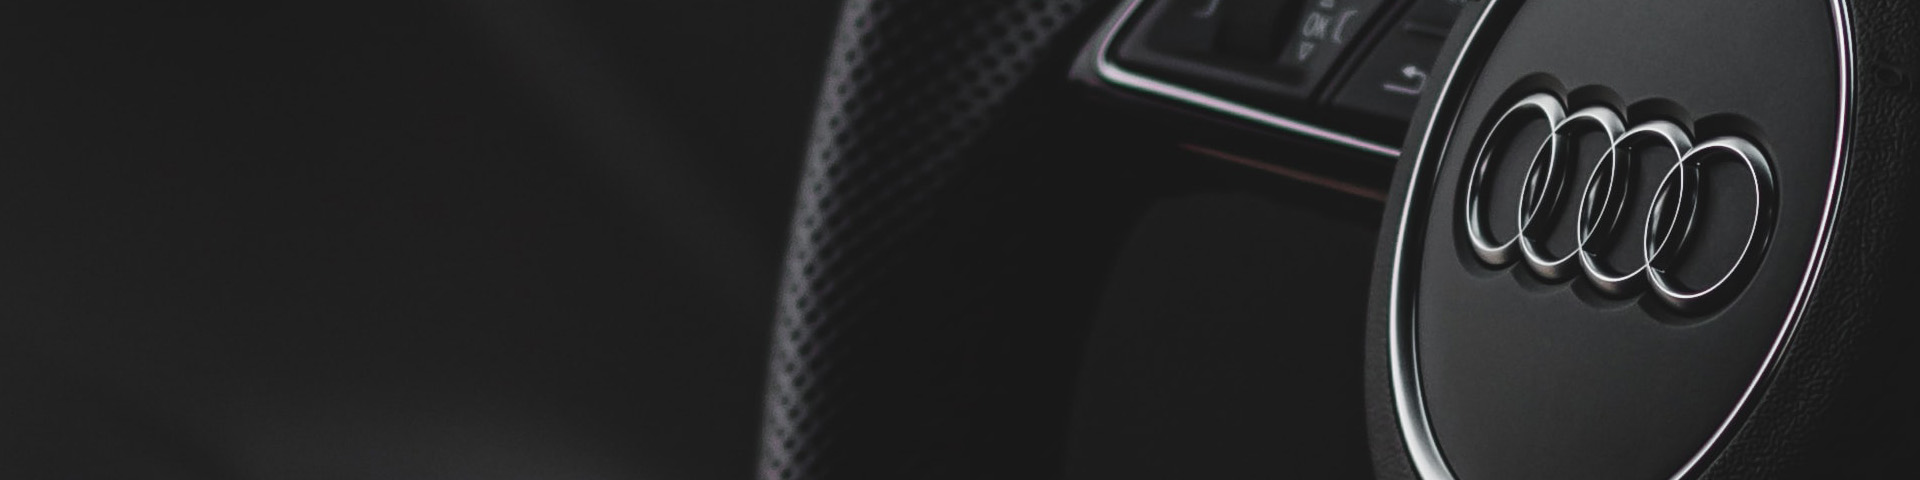 Audi TT Backdrop